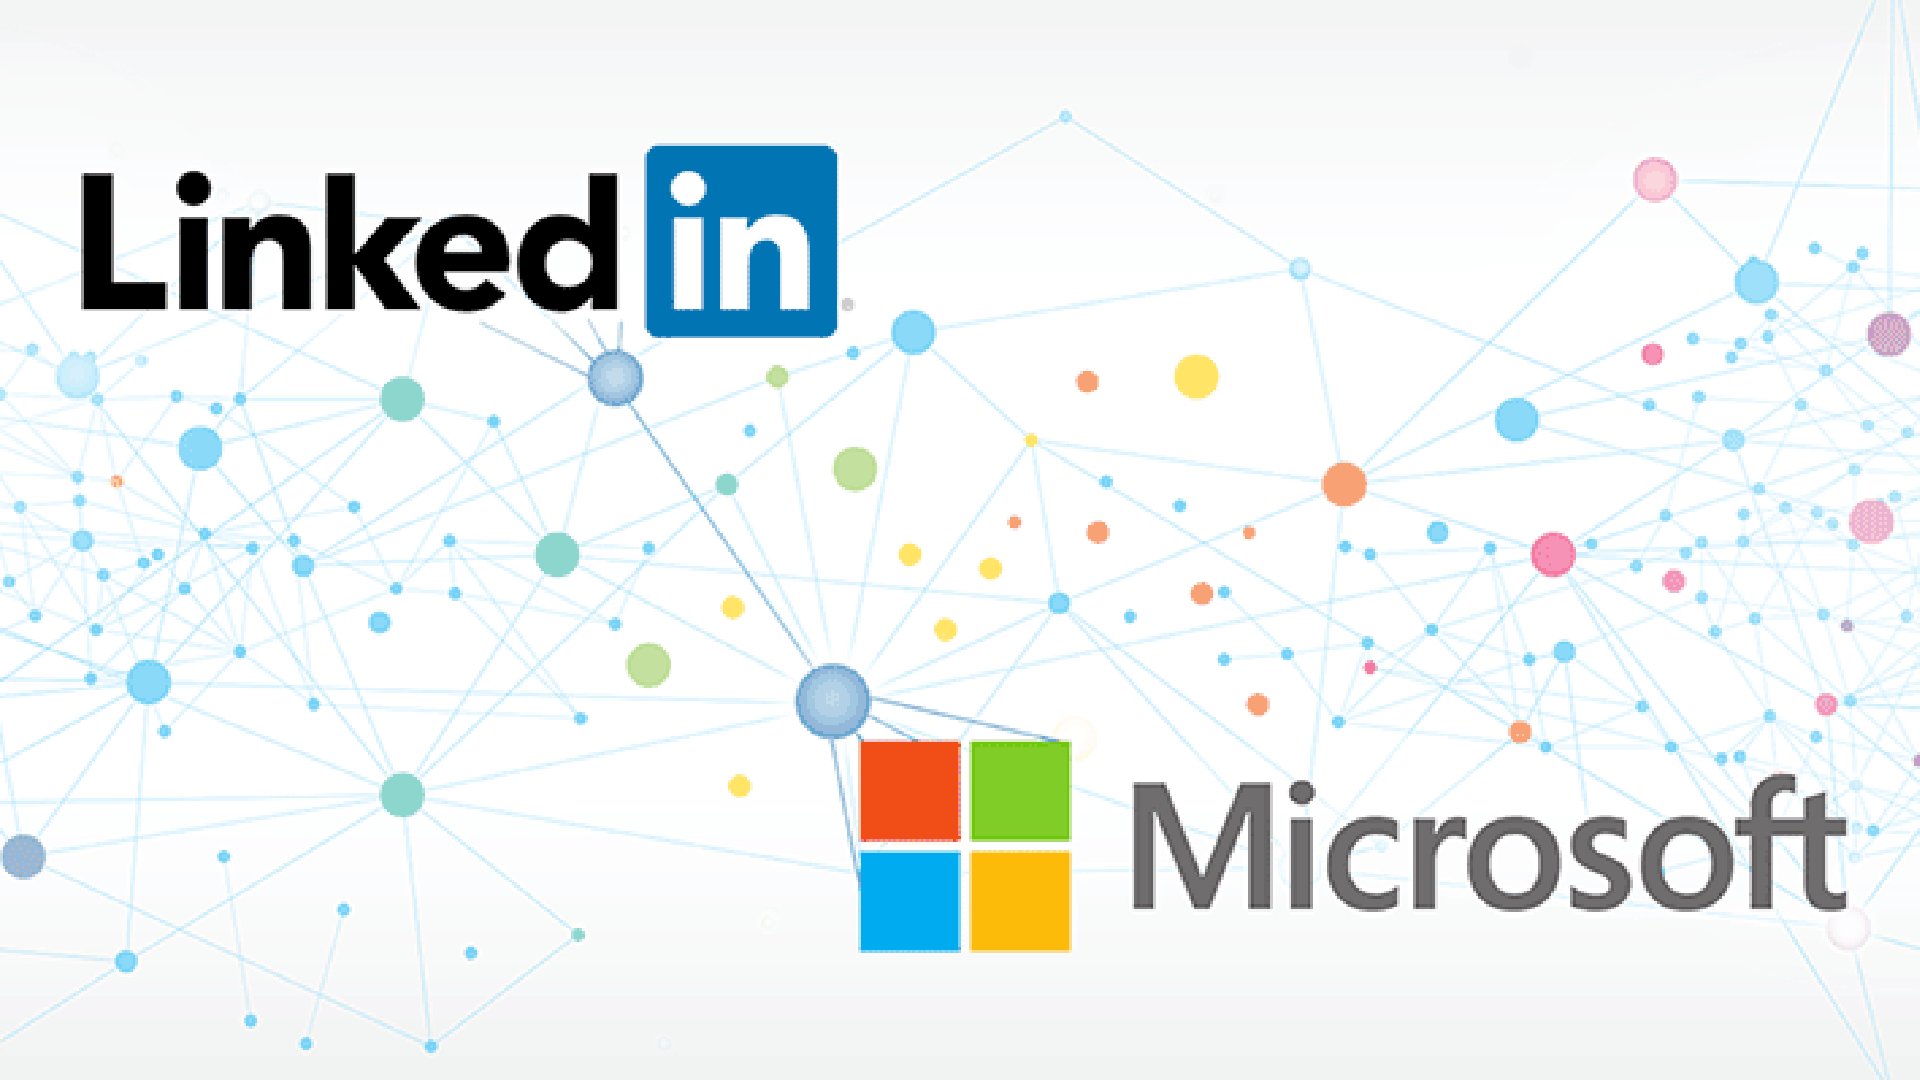 Microsoft - LinkedIn Acquisition